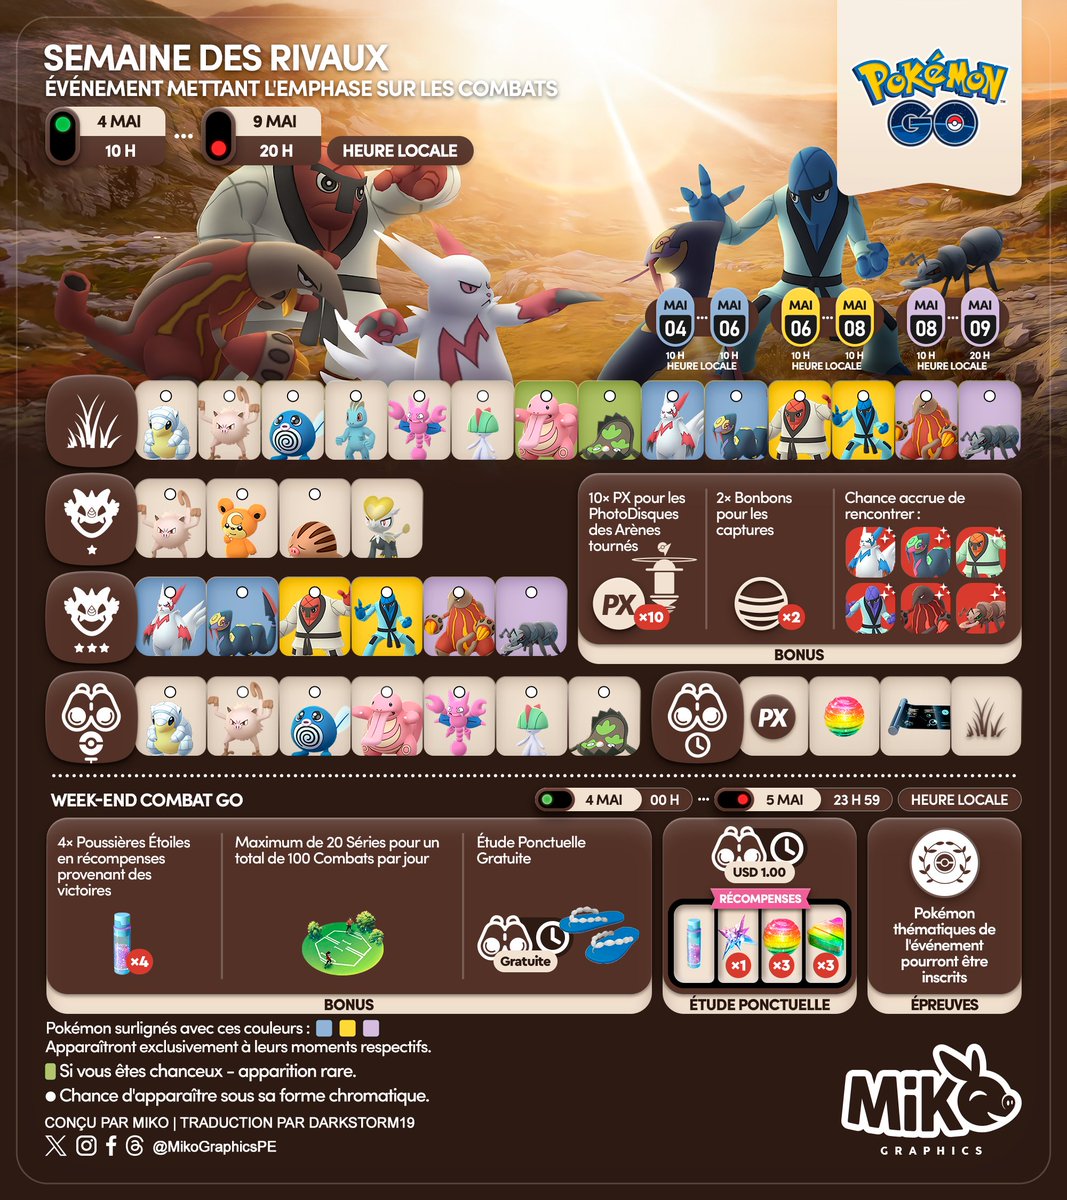 🇺🇸🇪🇸🇫🇷
Prepare for a battle-focused event in Pokémon GO: Rivals Week!

#PokemonGO #PokemonGOApp #MikoGraphics #G2G